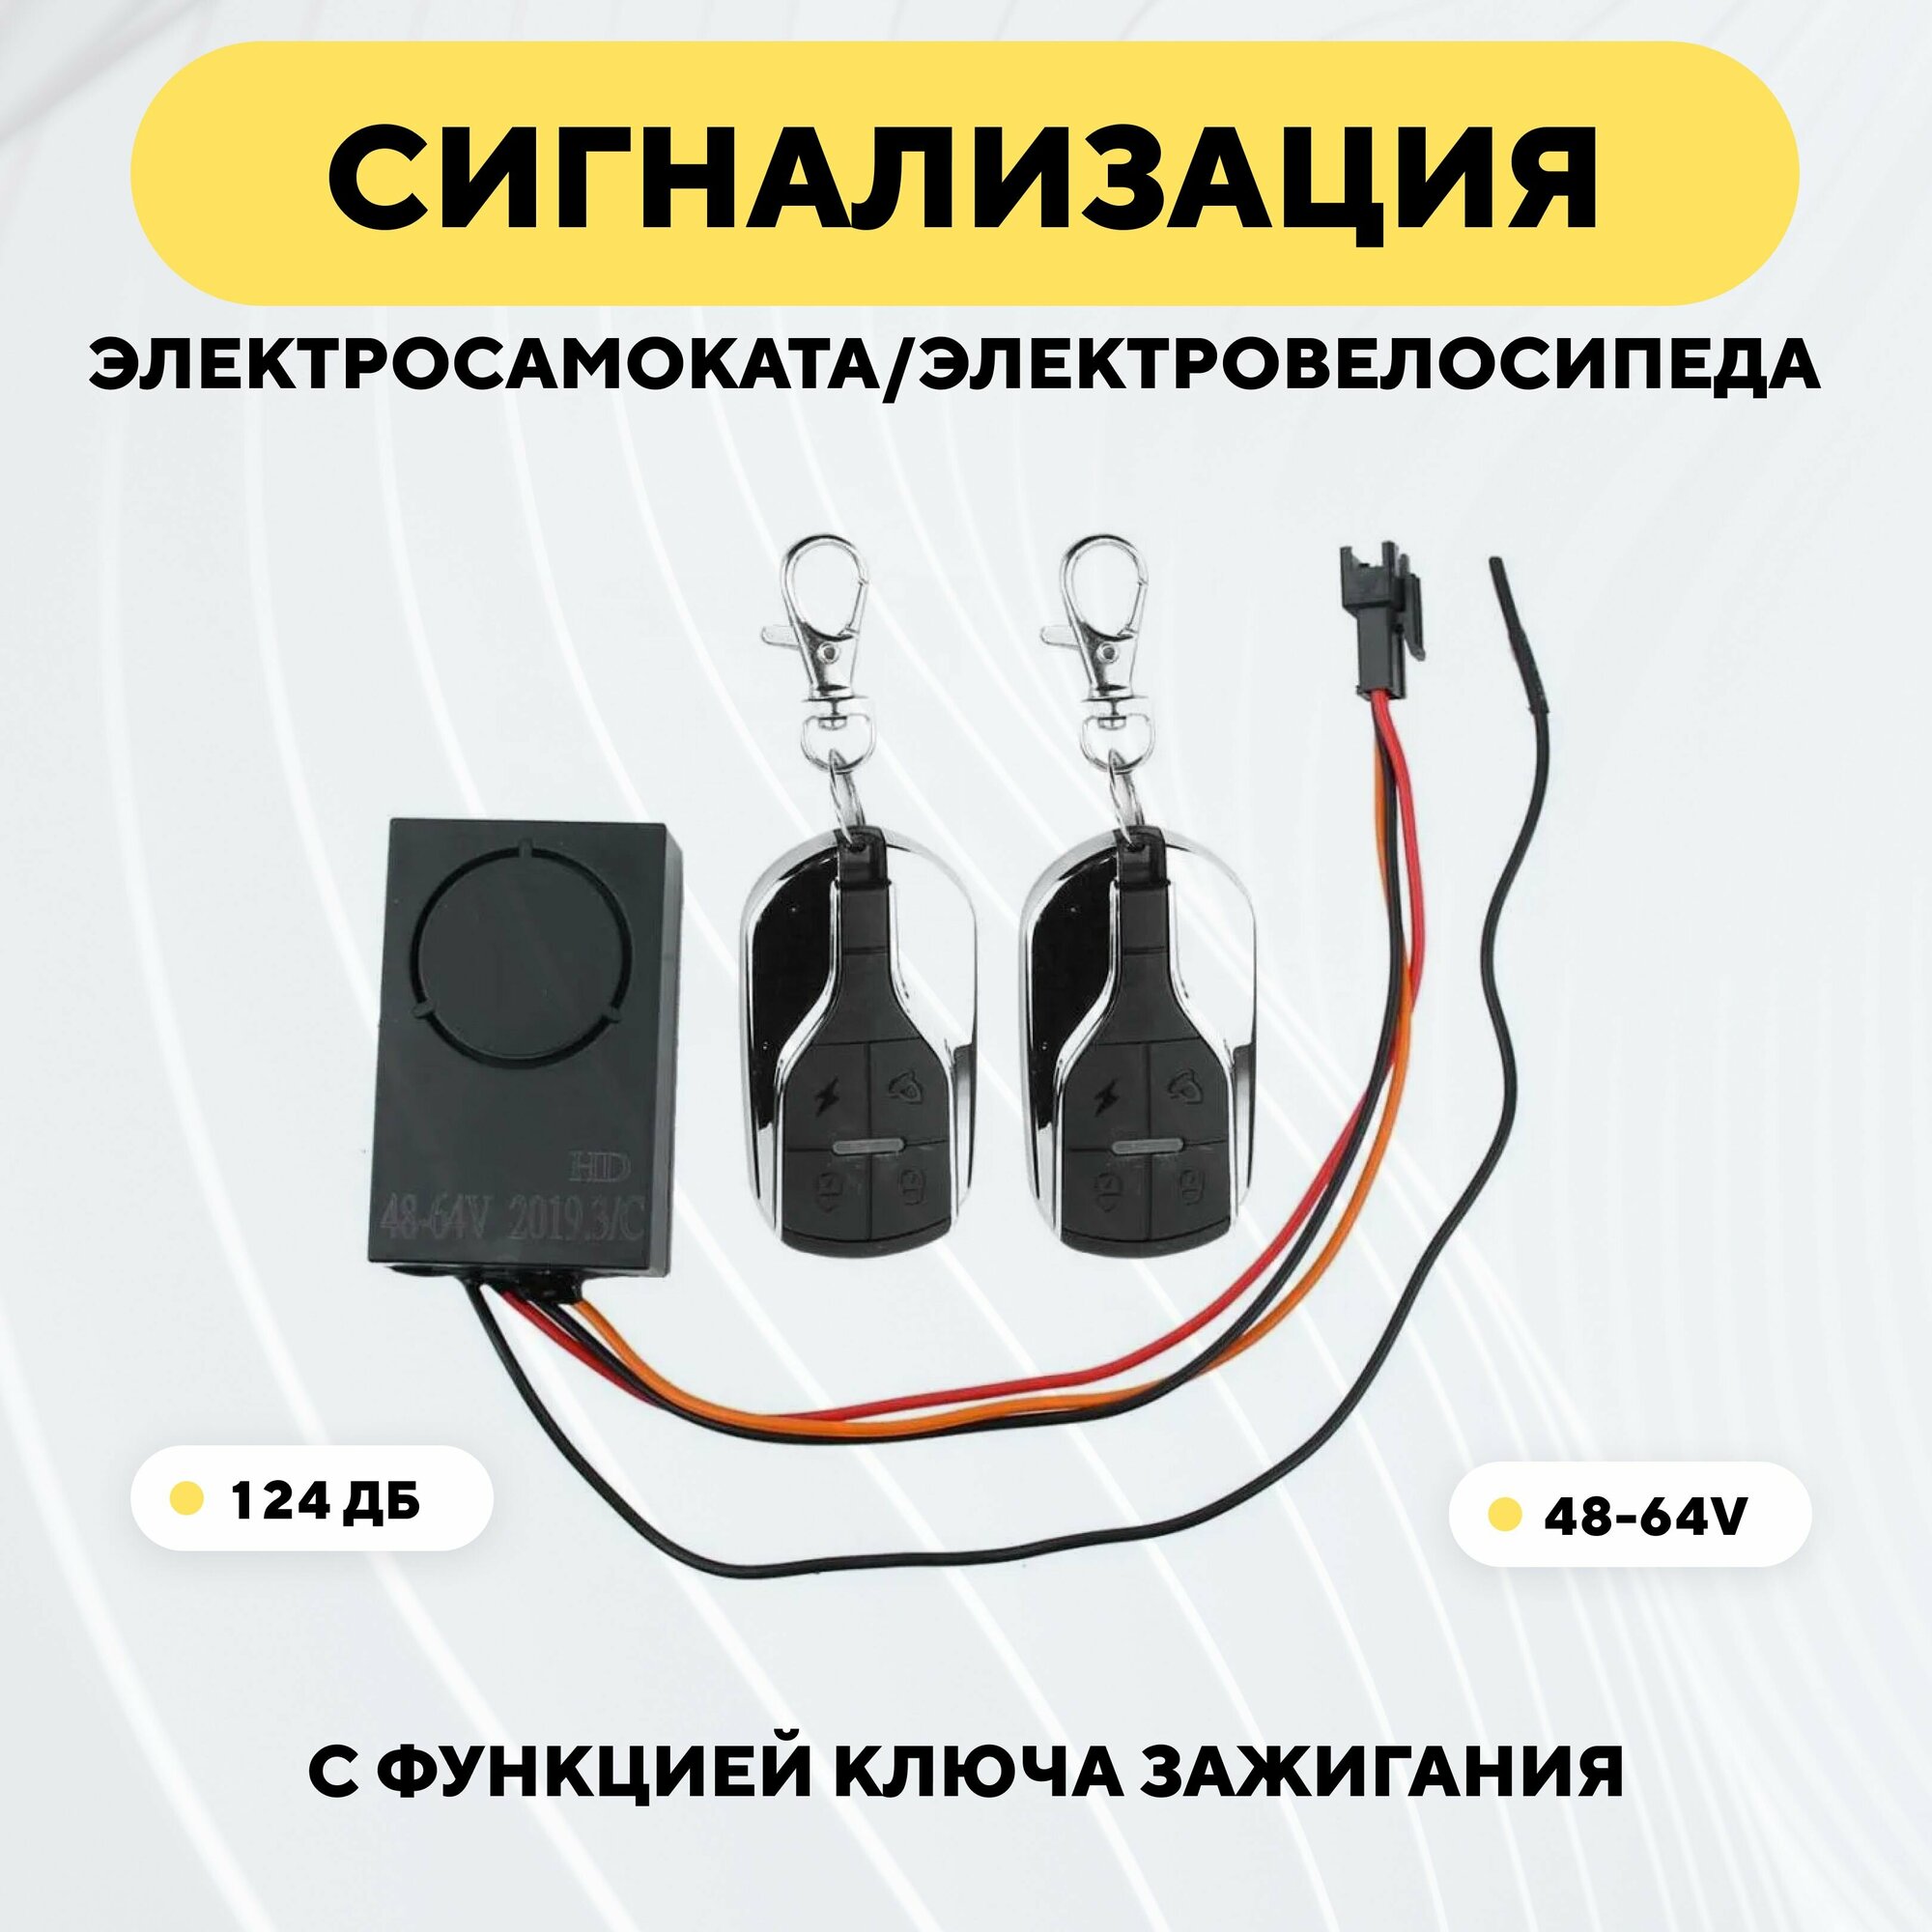 Сигнализация для электросамоката (48-64 В 124 Дб) с функцией ключа зажигания